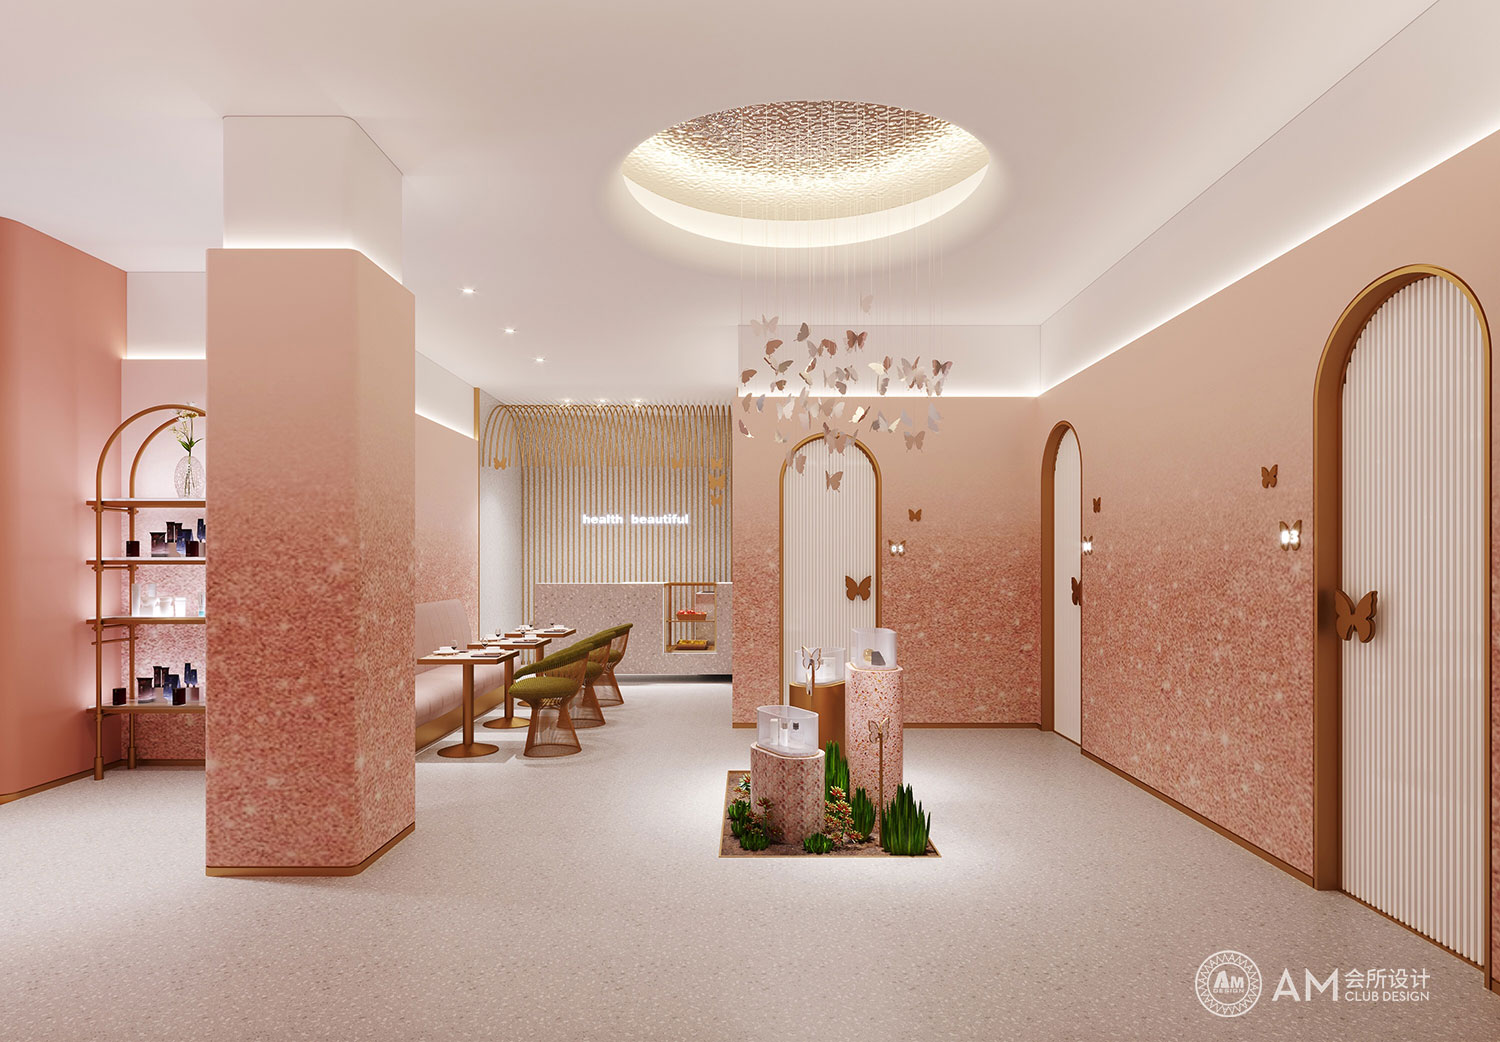 AM DESIGN | Atrium design of Andison Beauty Salon